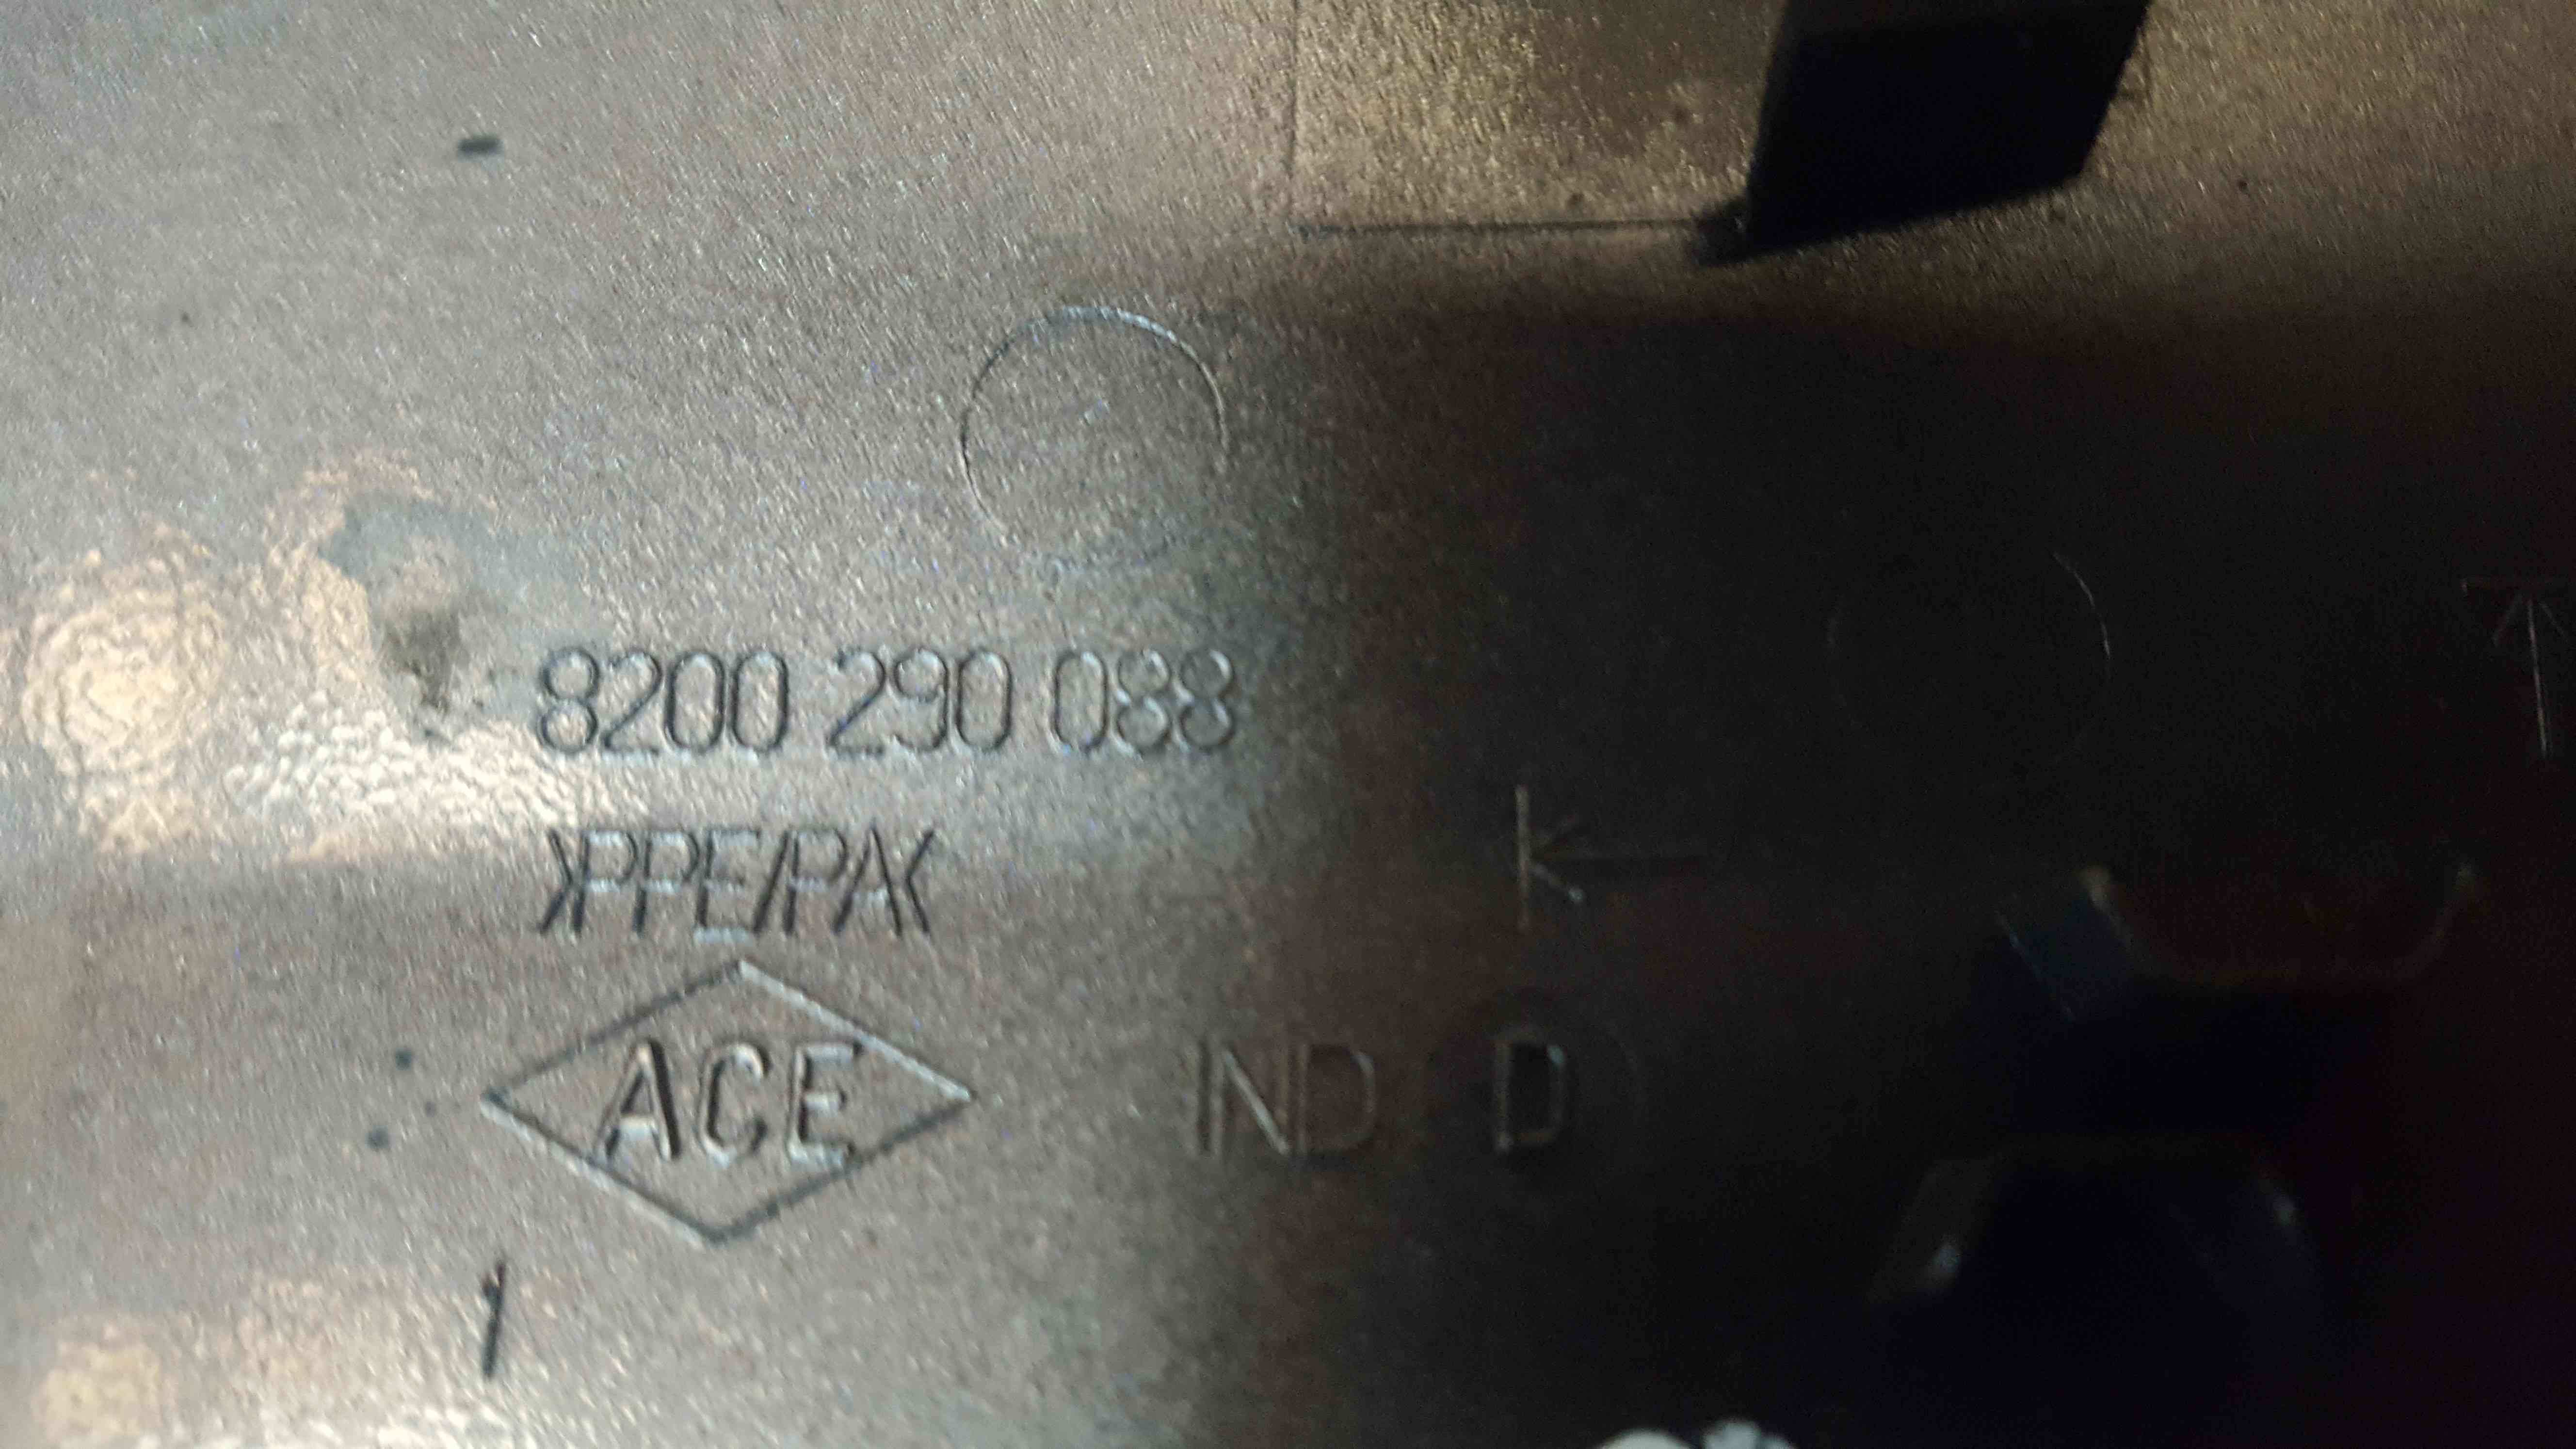 Renault Clio MK3 2009-2012 Fuel Flap Cover Grey Tekng 8200290088